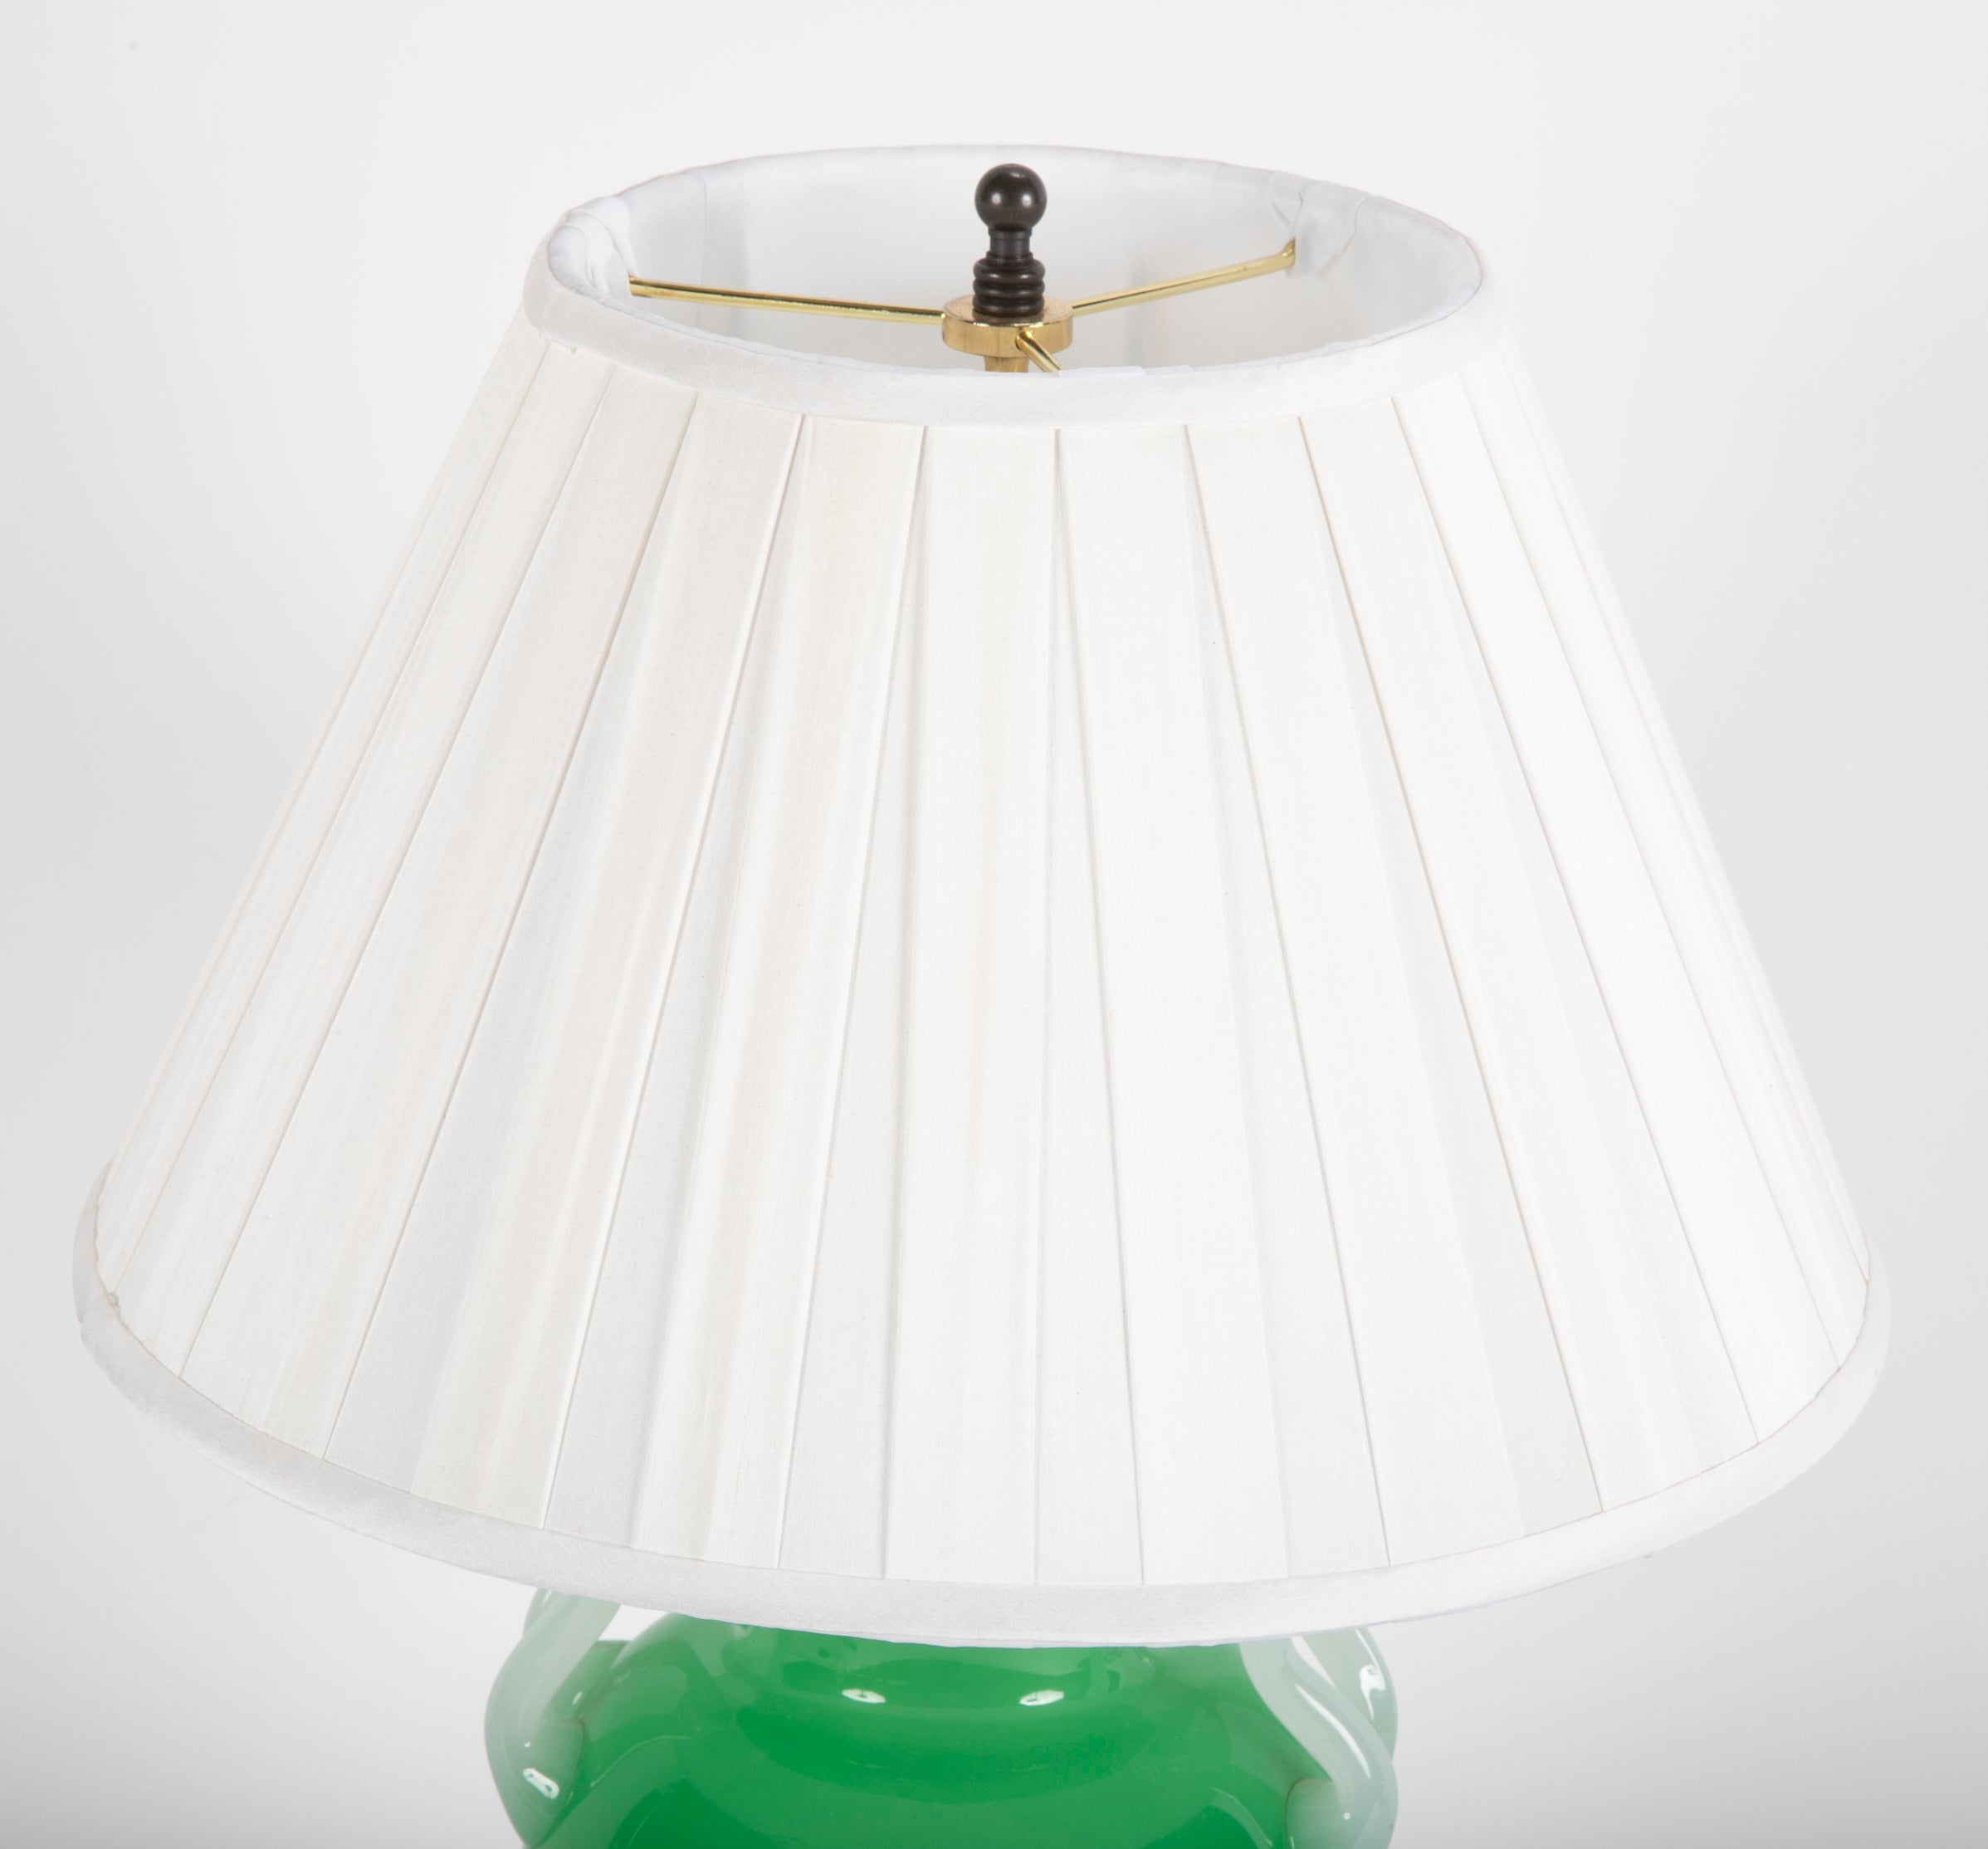 Steuben Glass Vase now a Table Lamp